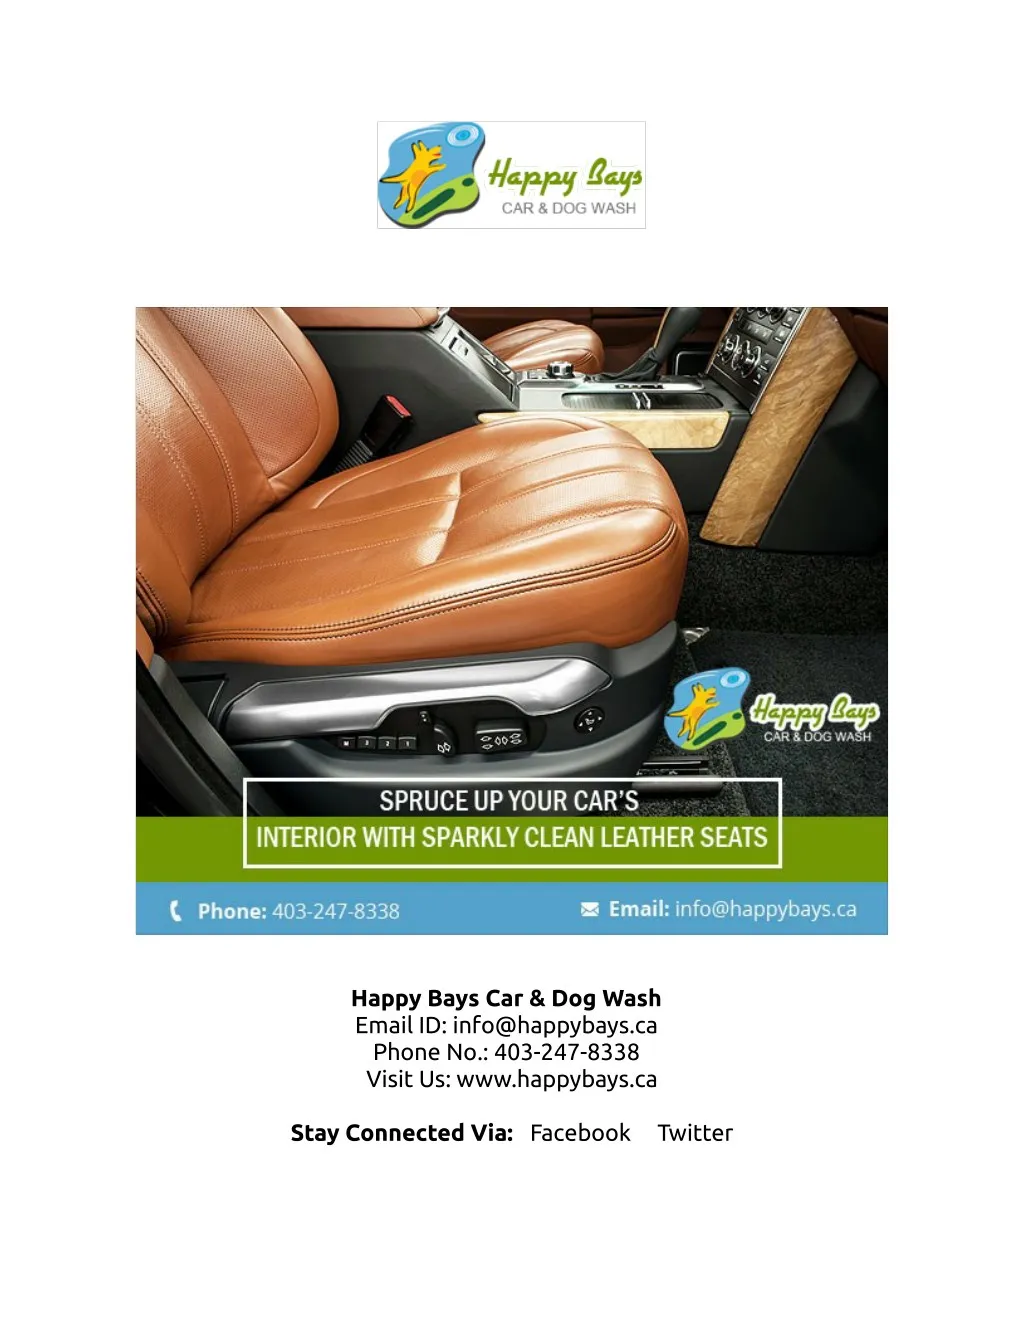 happy bays car dog wash email id info@happybays